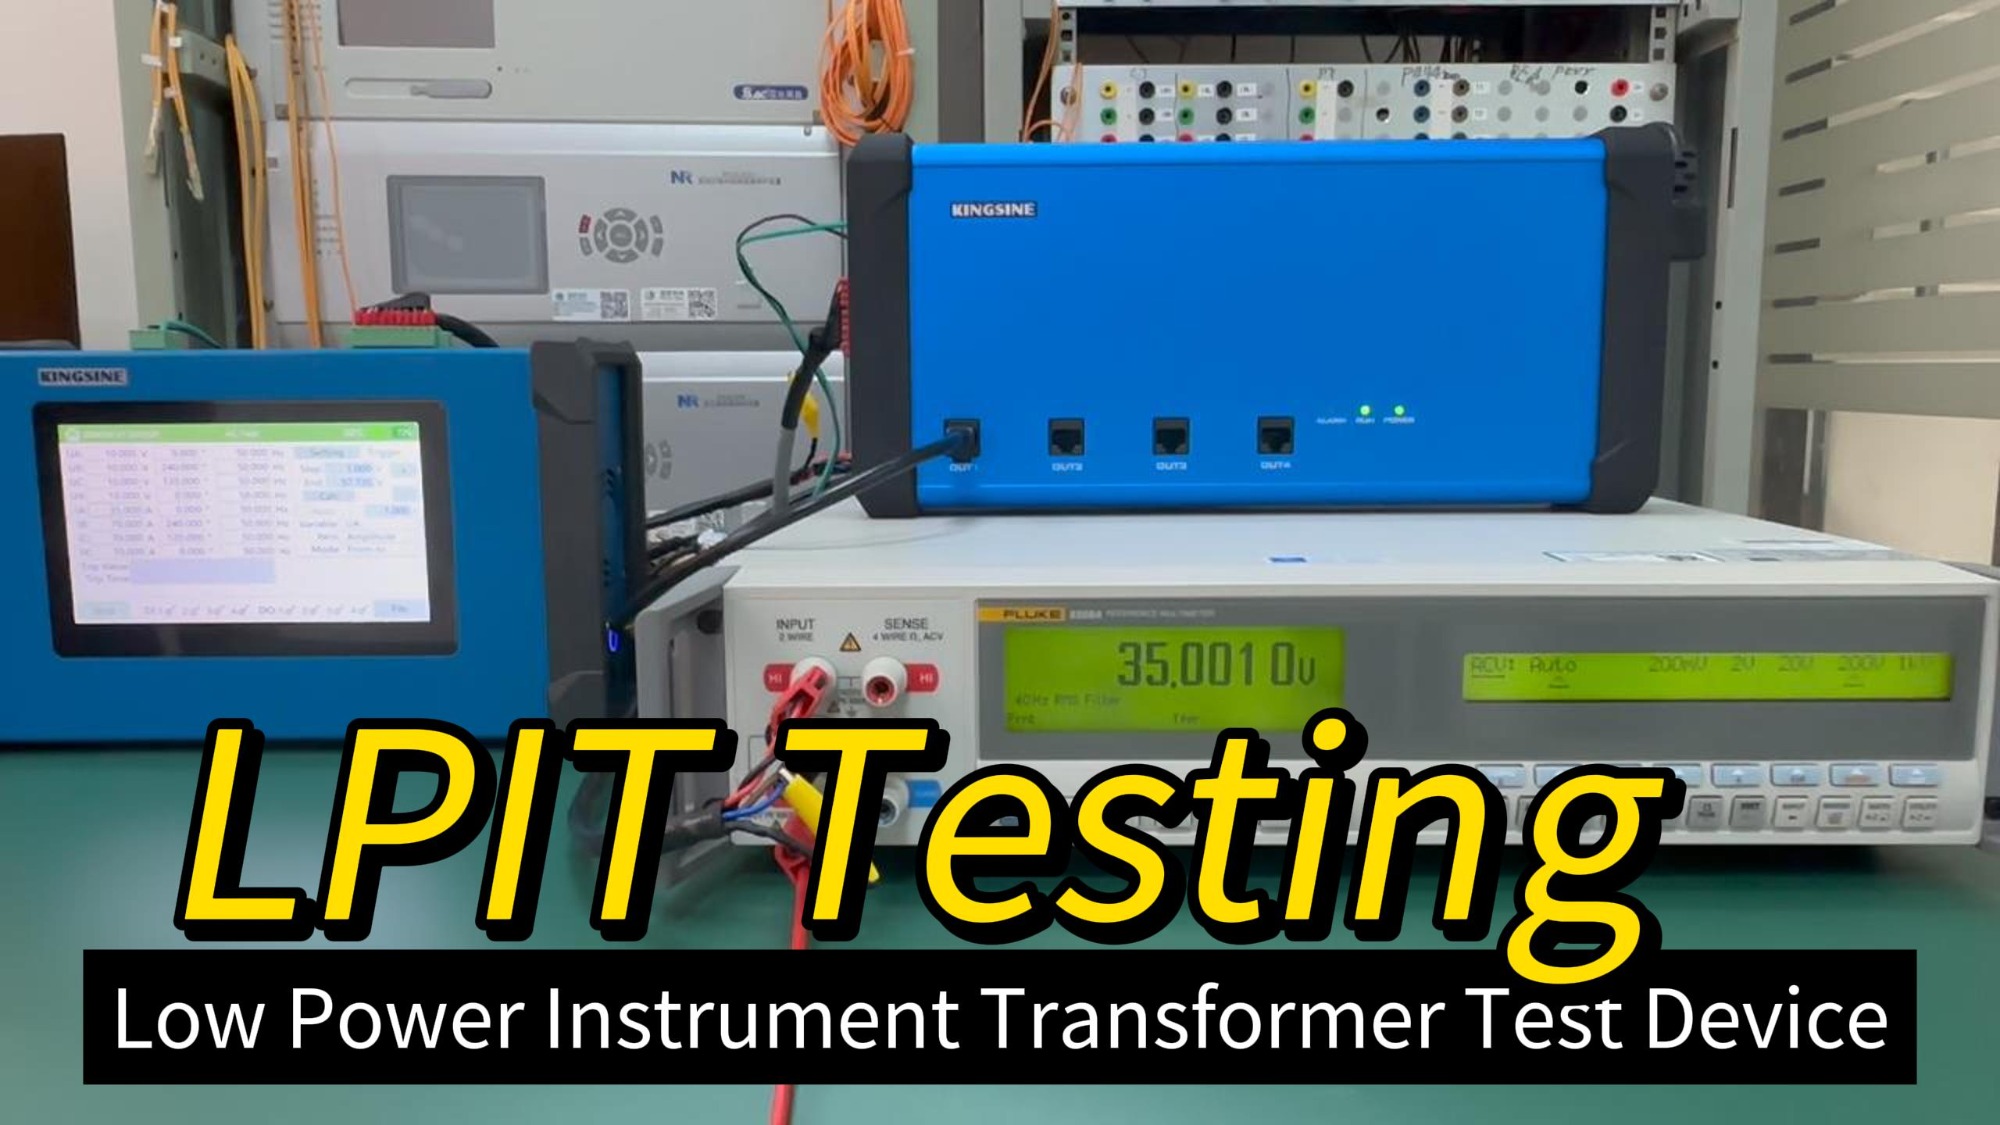 LPIT Testing Low Power Instrument Transformer Test Device